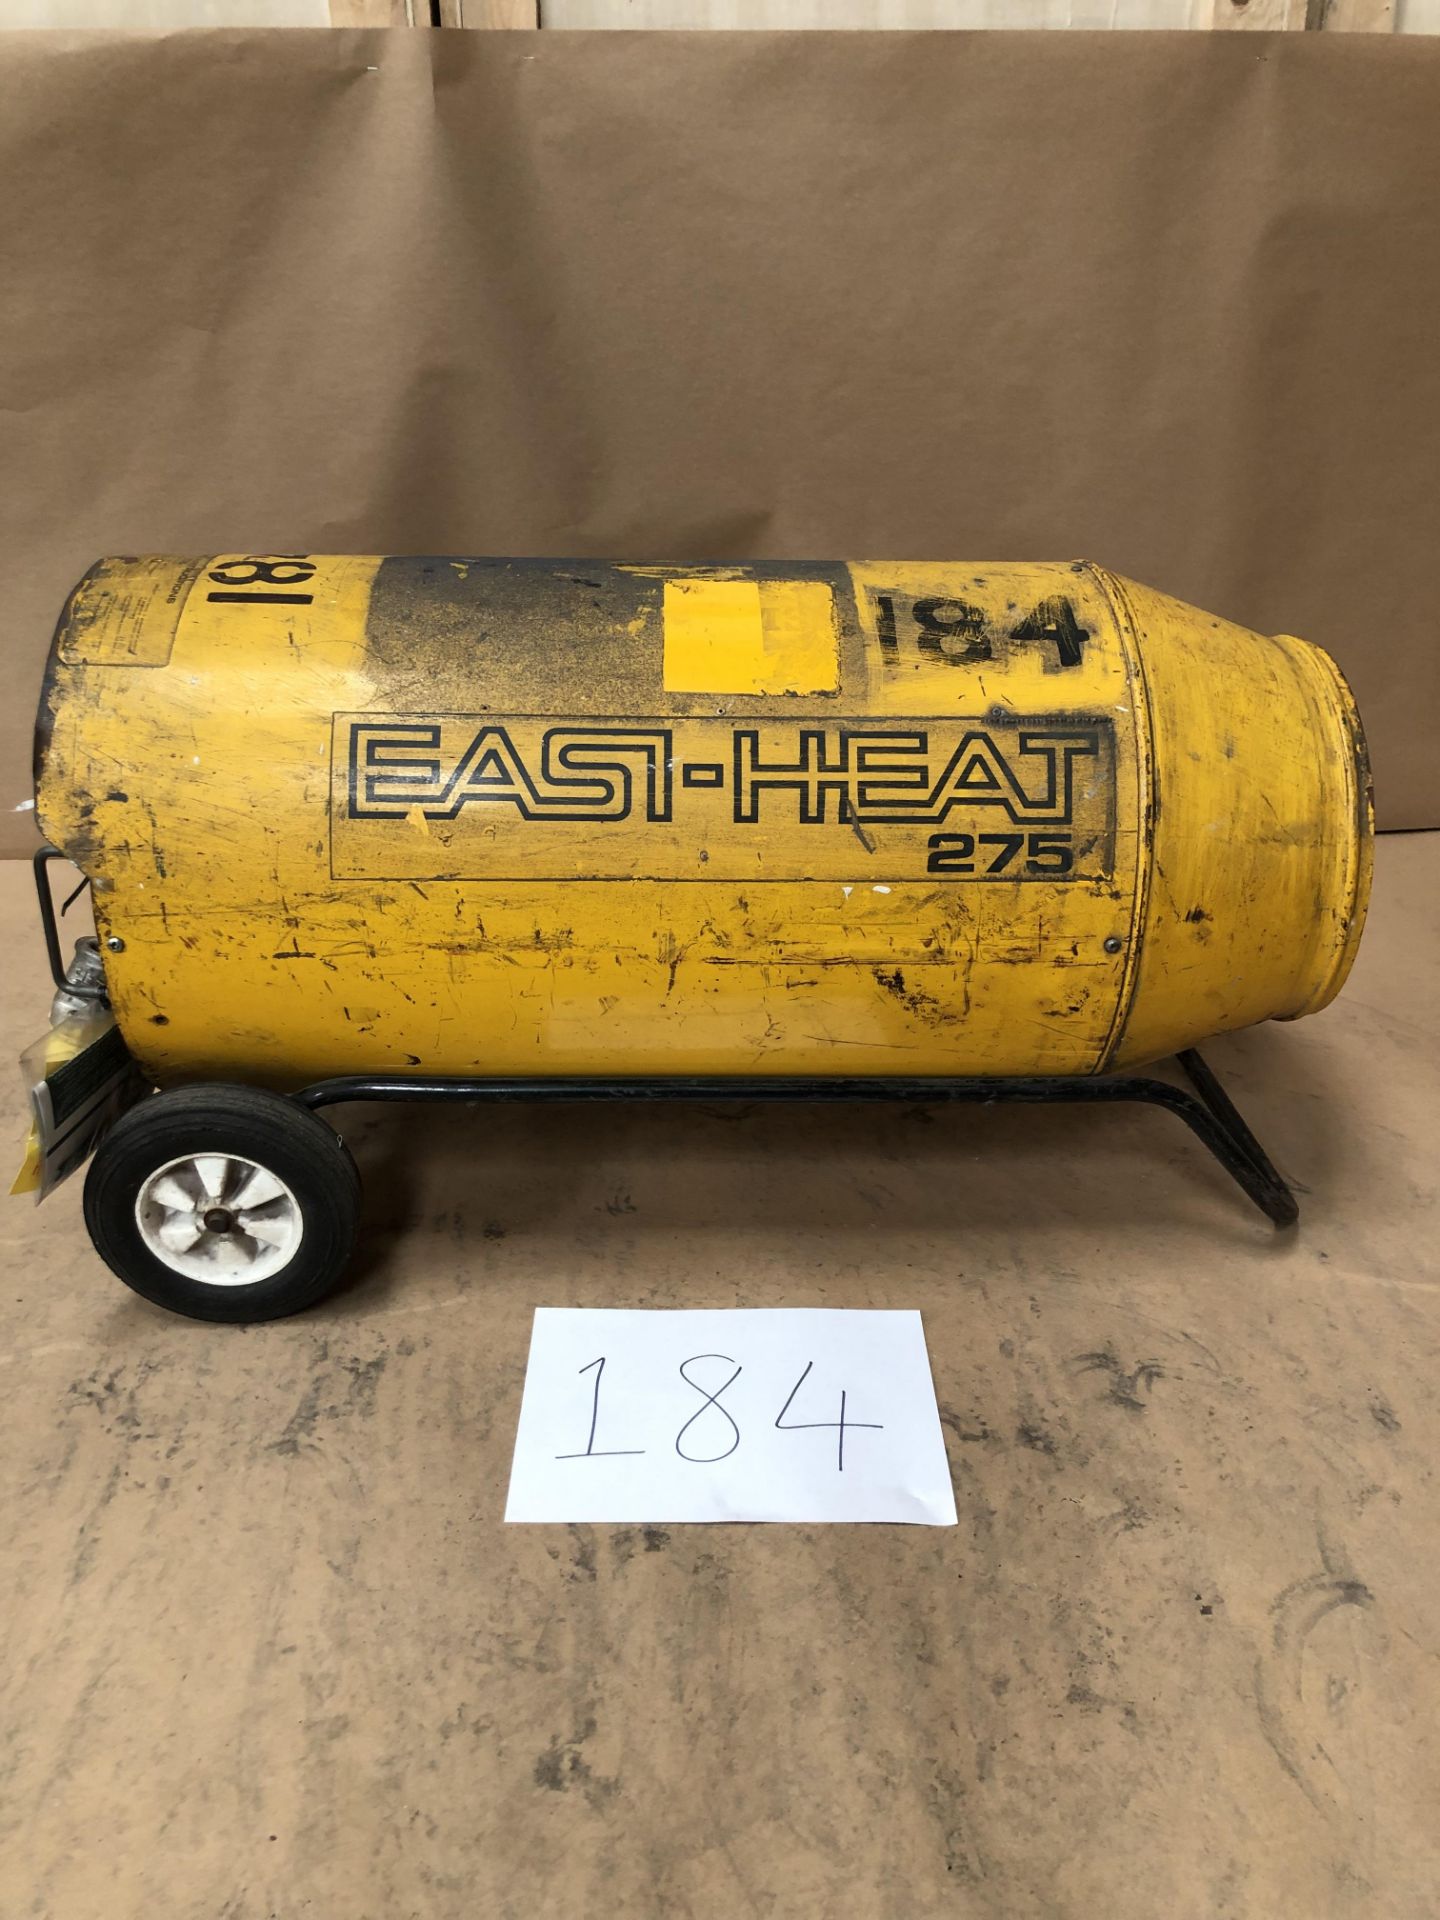 Easyheater 275 Propane Heater